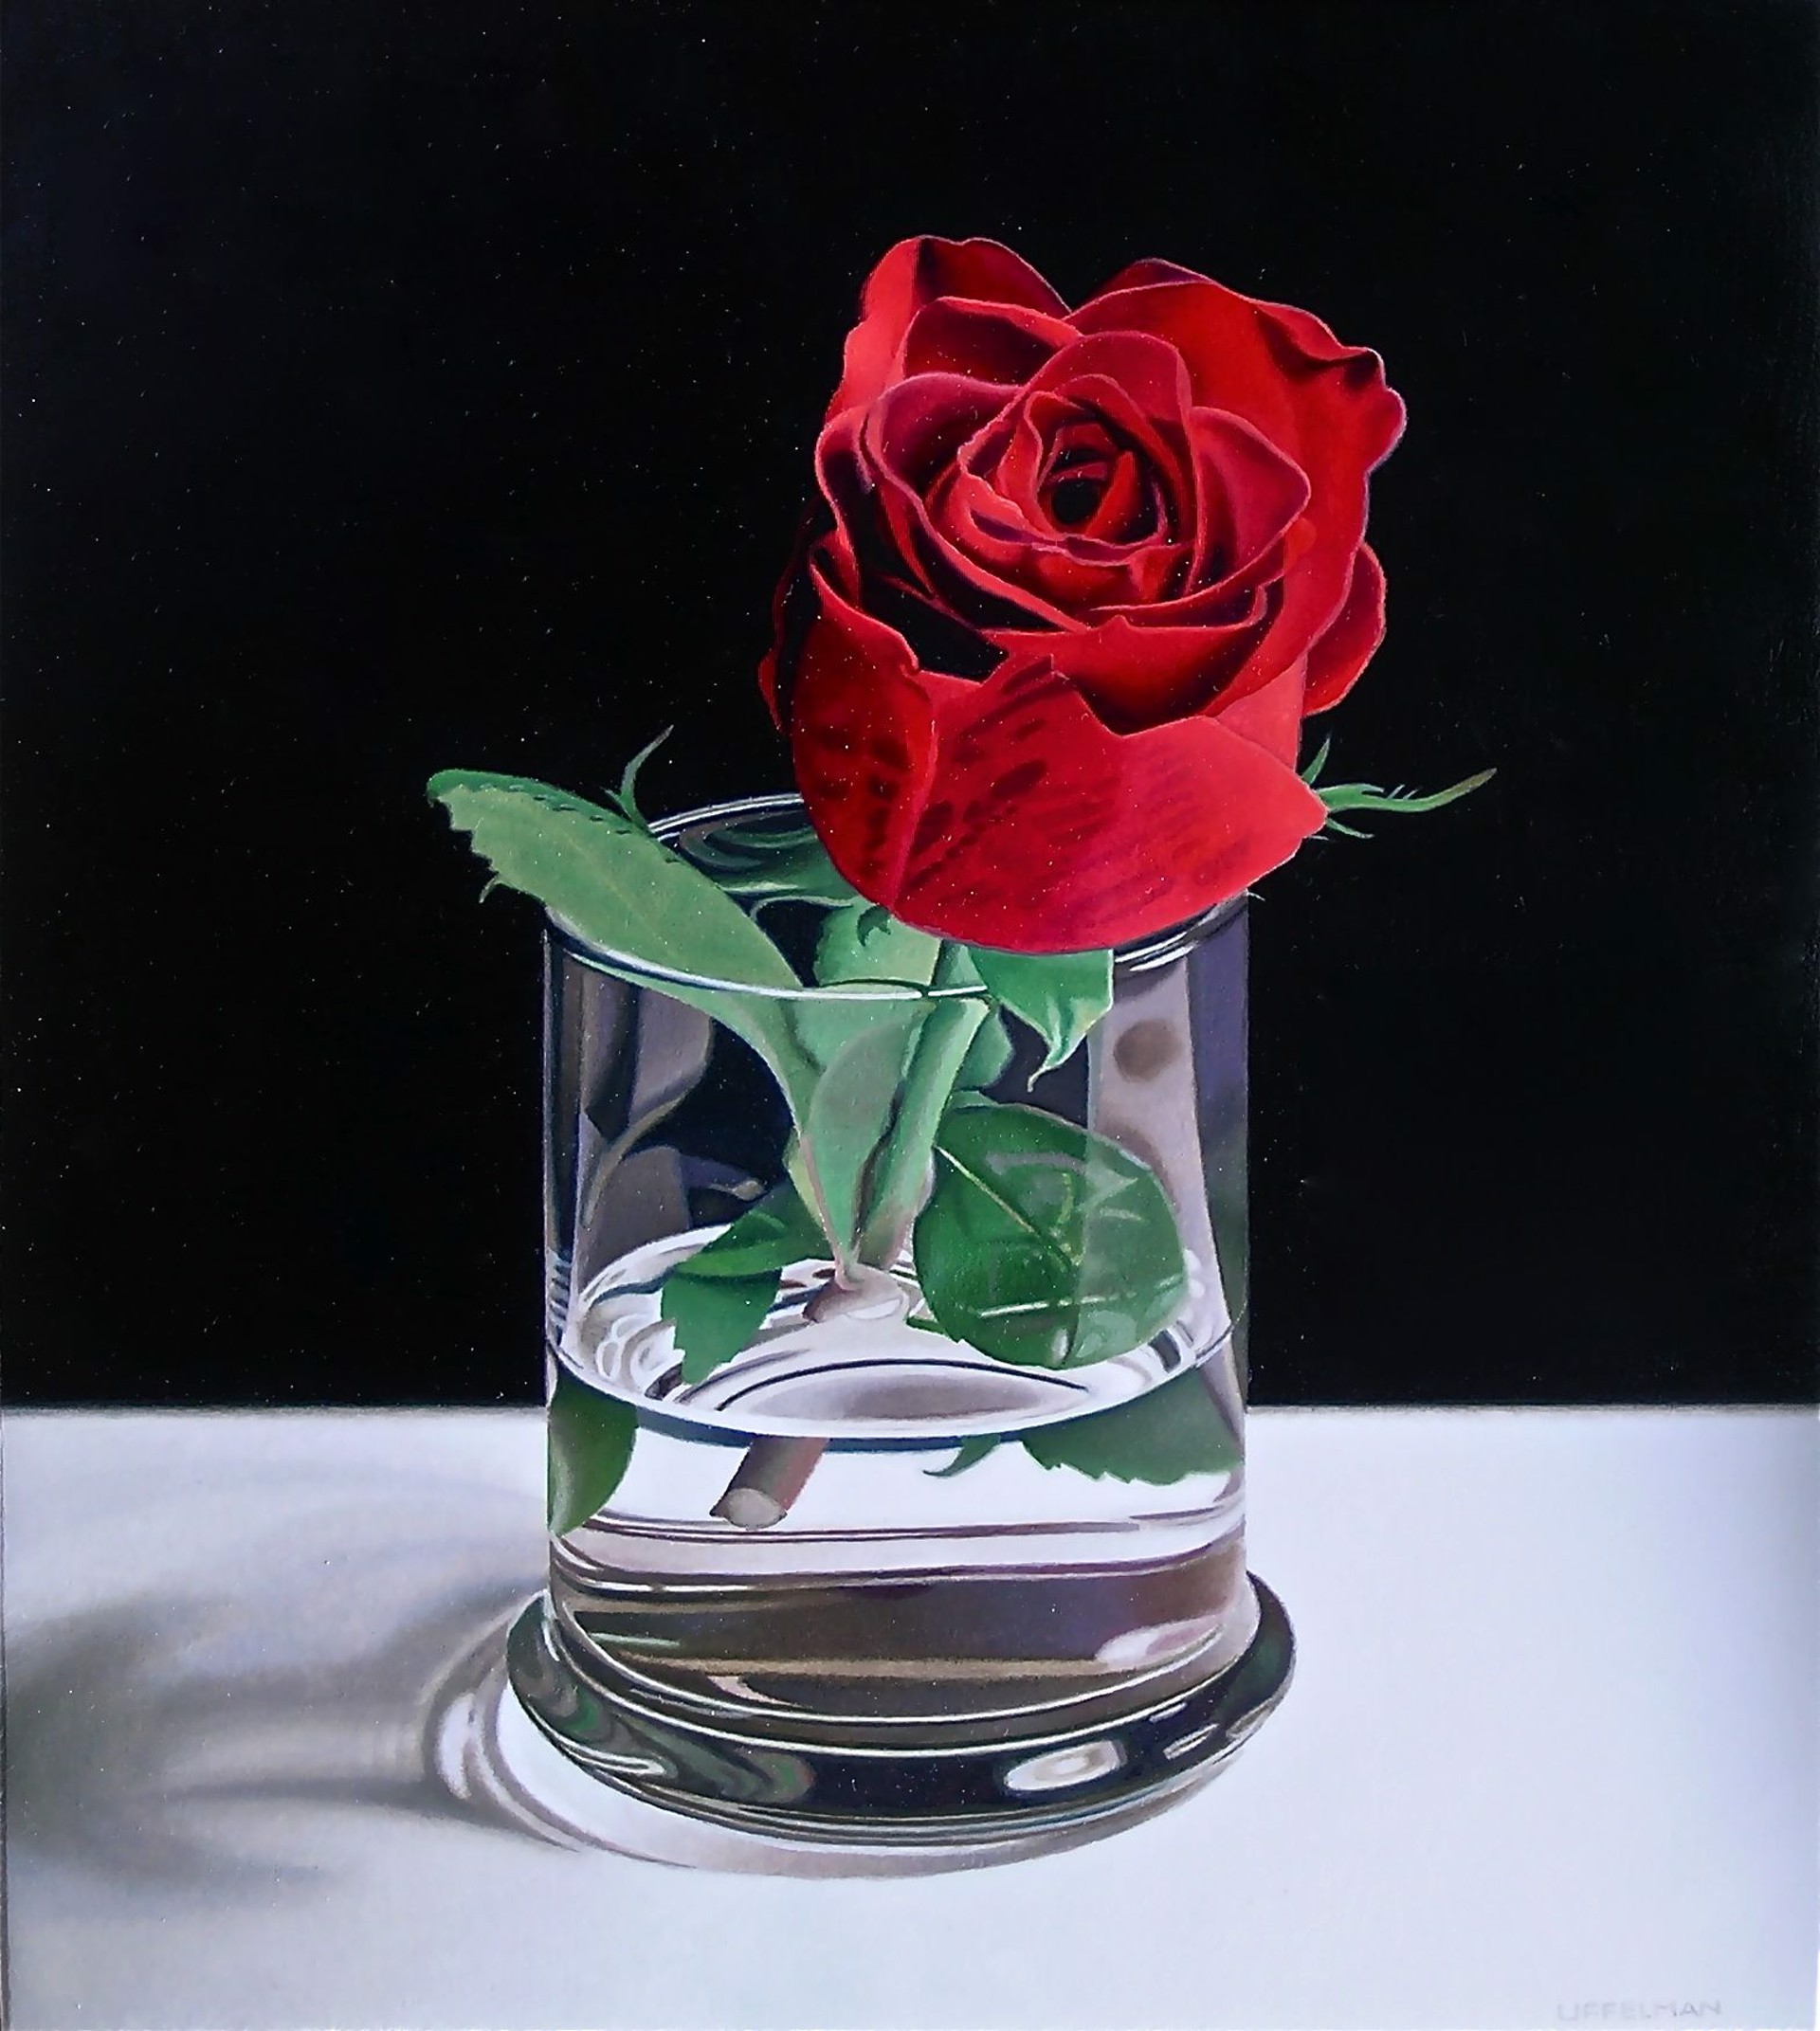 Rose by Jeff Uffelman